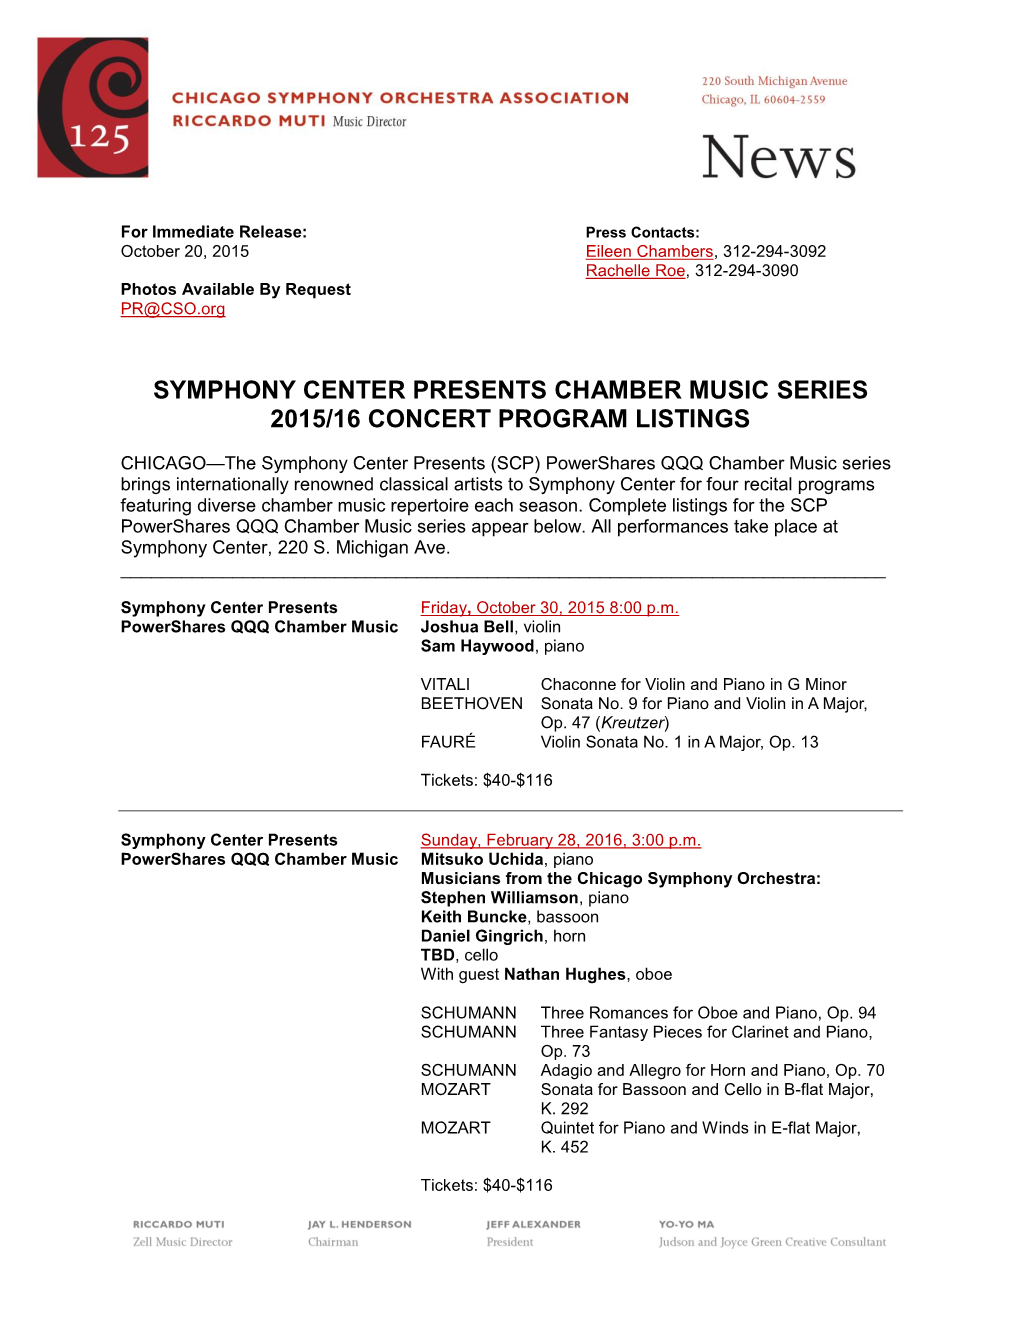 Symphony Center Presents Chamber Music Series 2015/16 Concert Program Listings